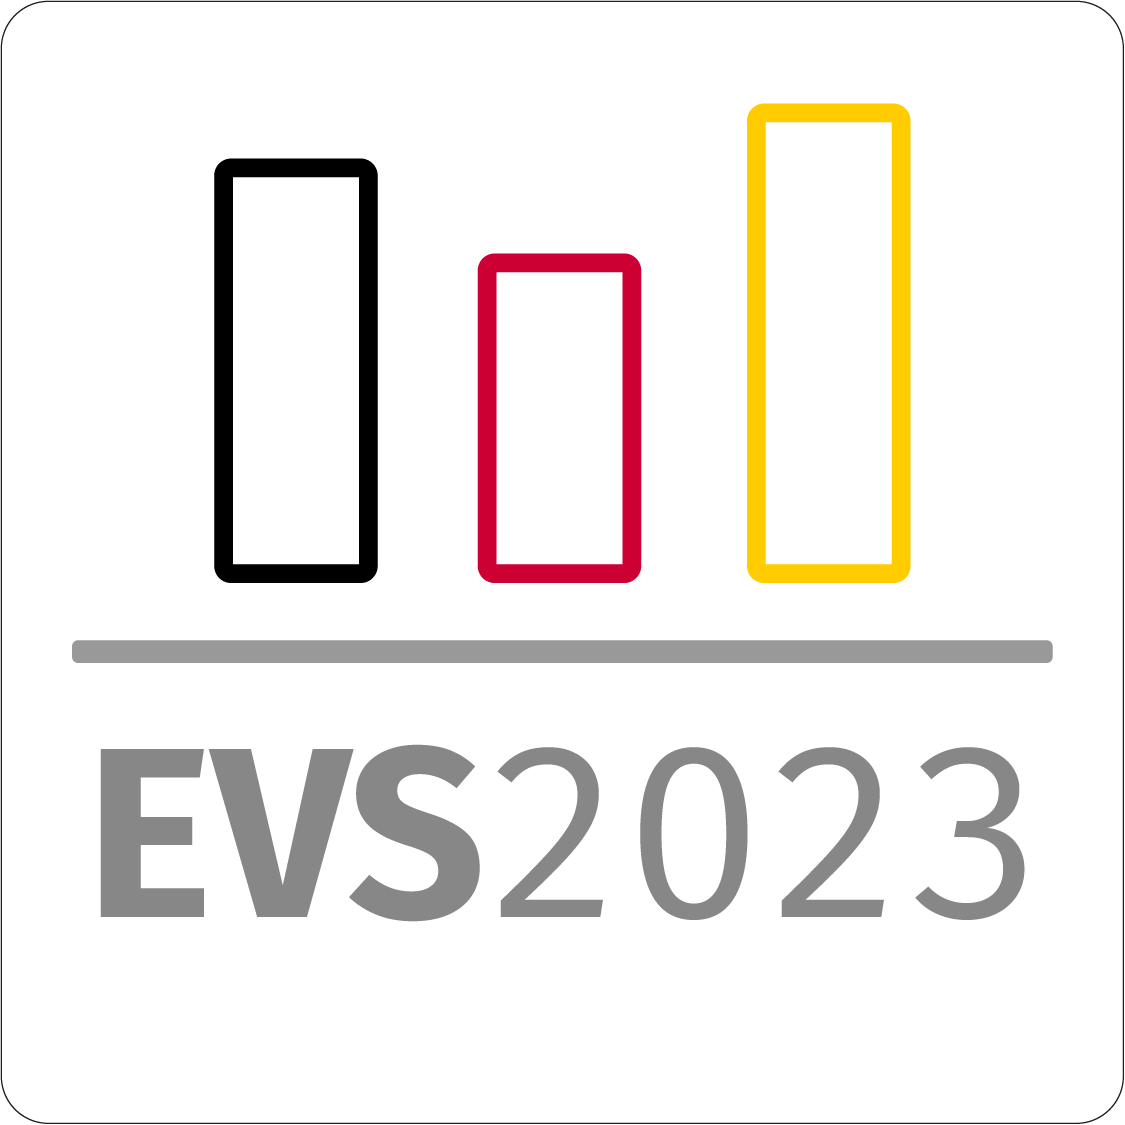 EVS 2023